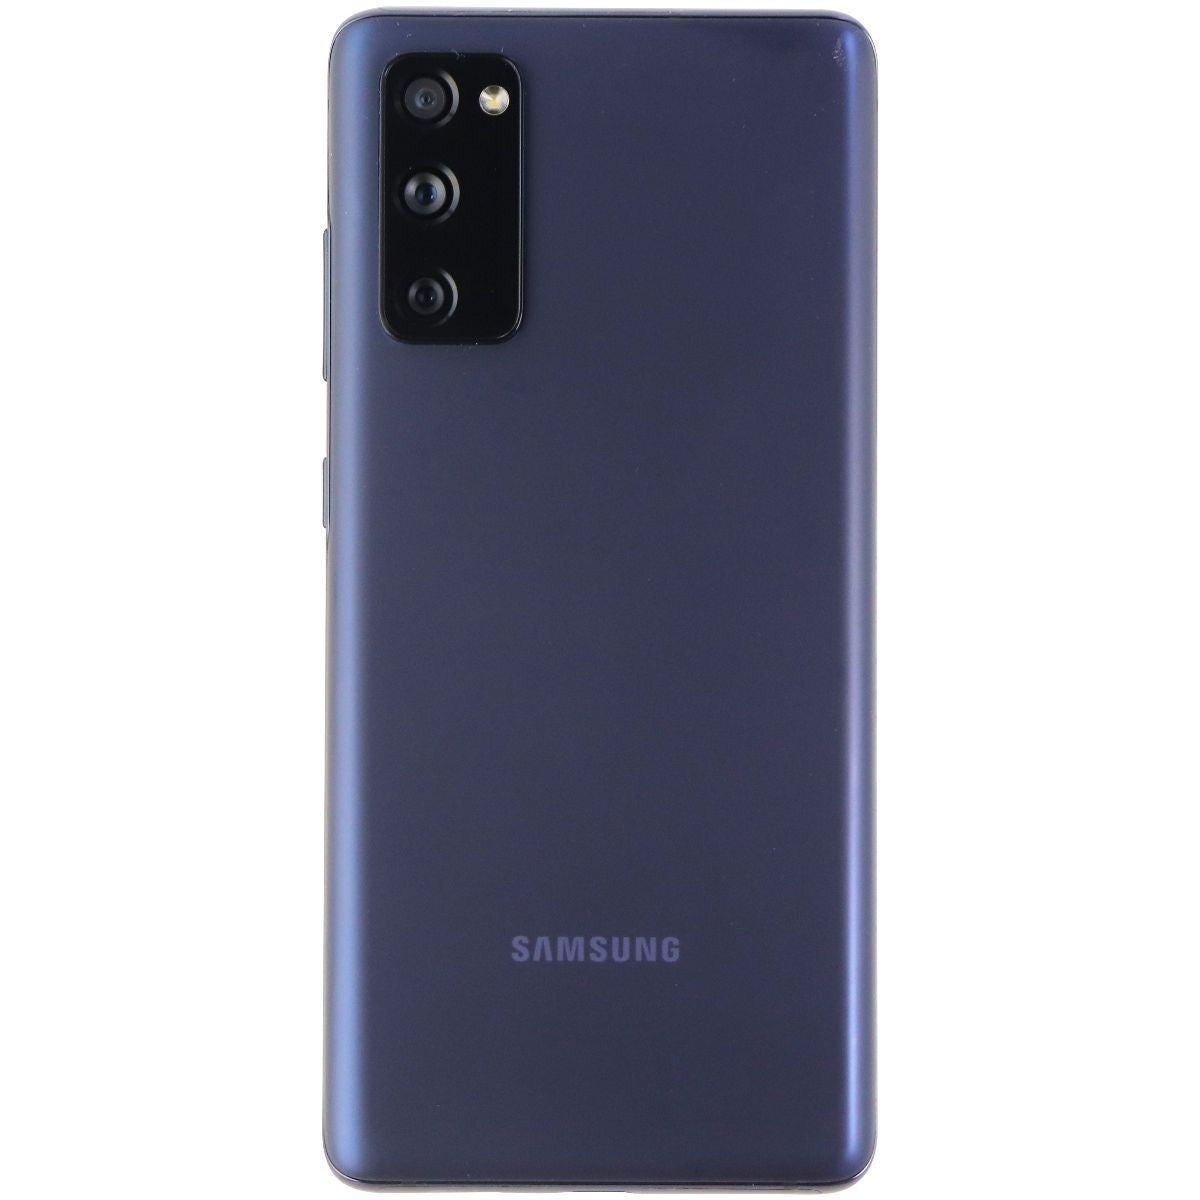 Samsung Galaxy S20 FE 5G - SM-G781U - 128GB - (GSM Unlocked) - Good